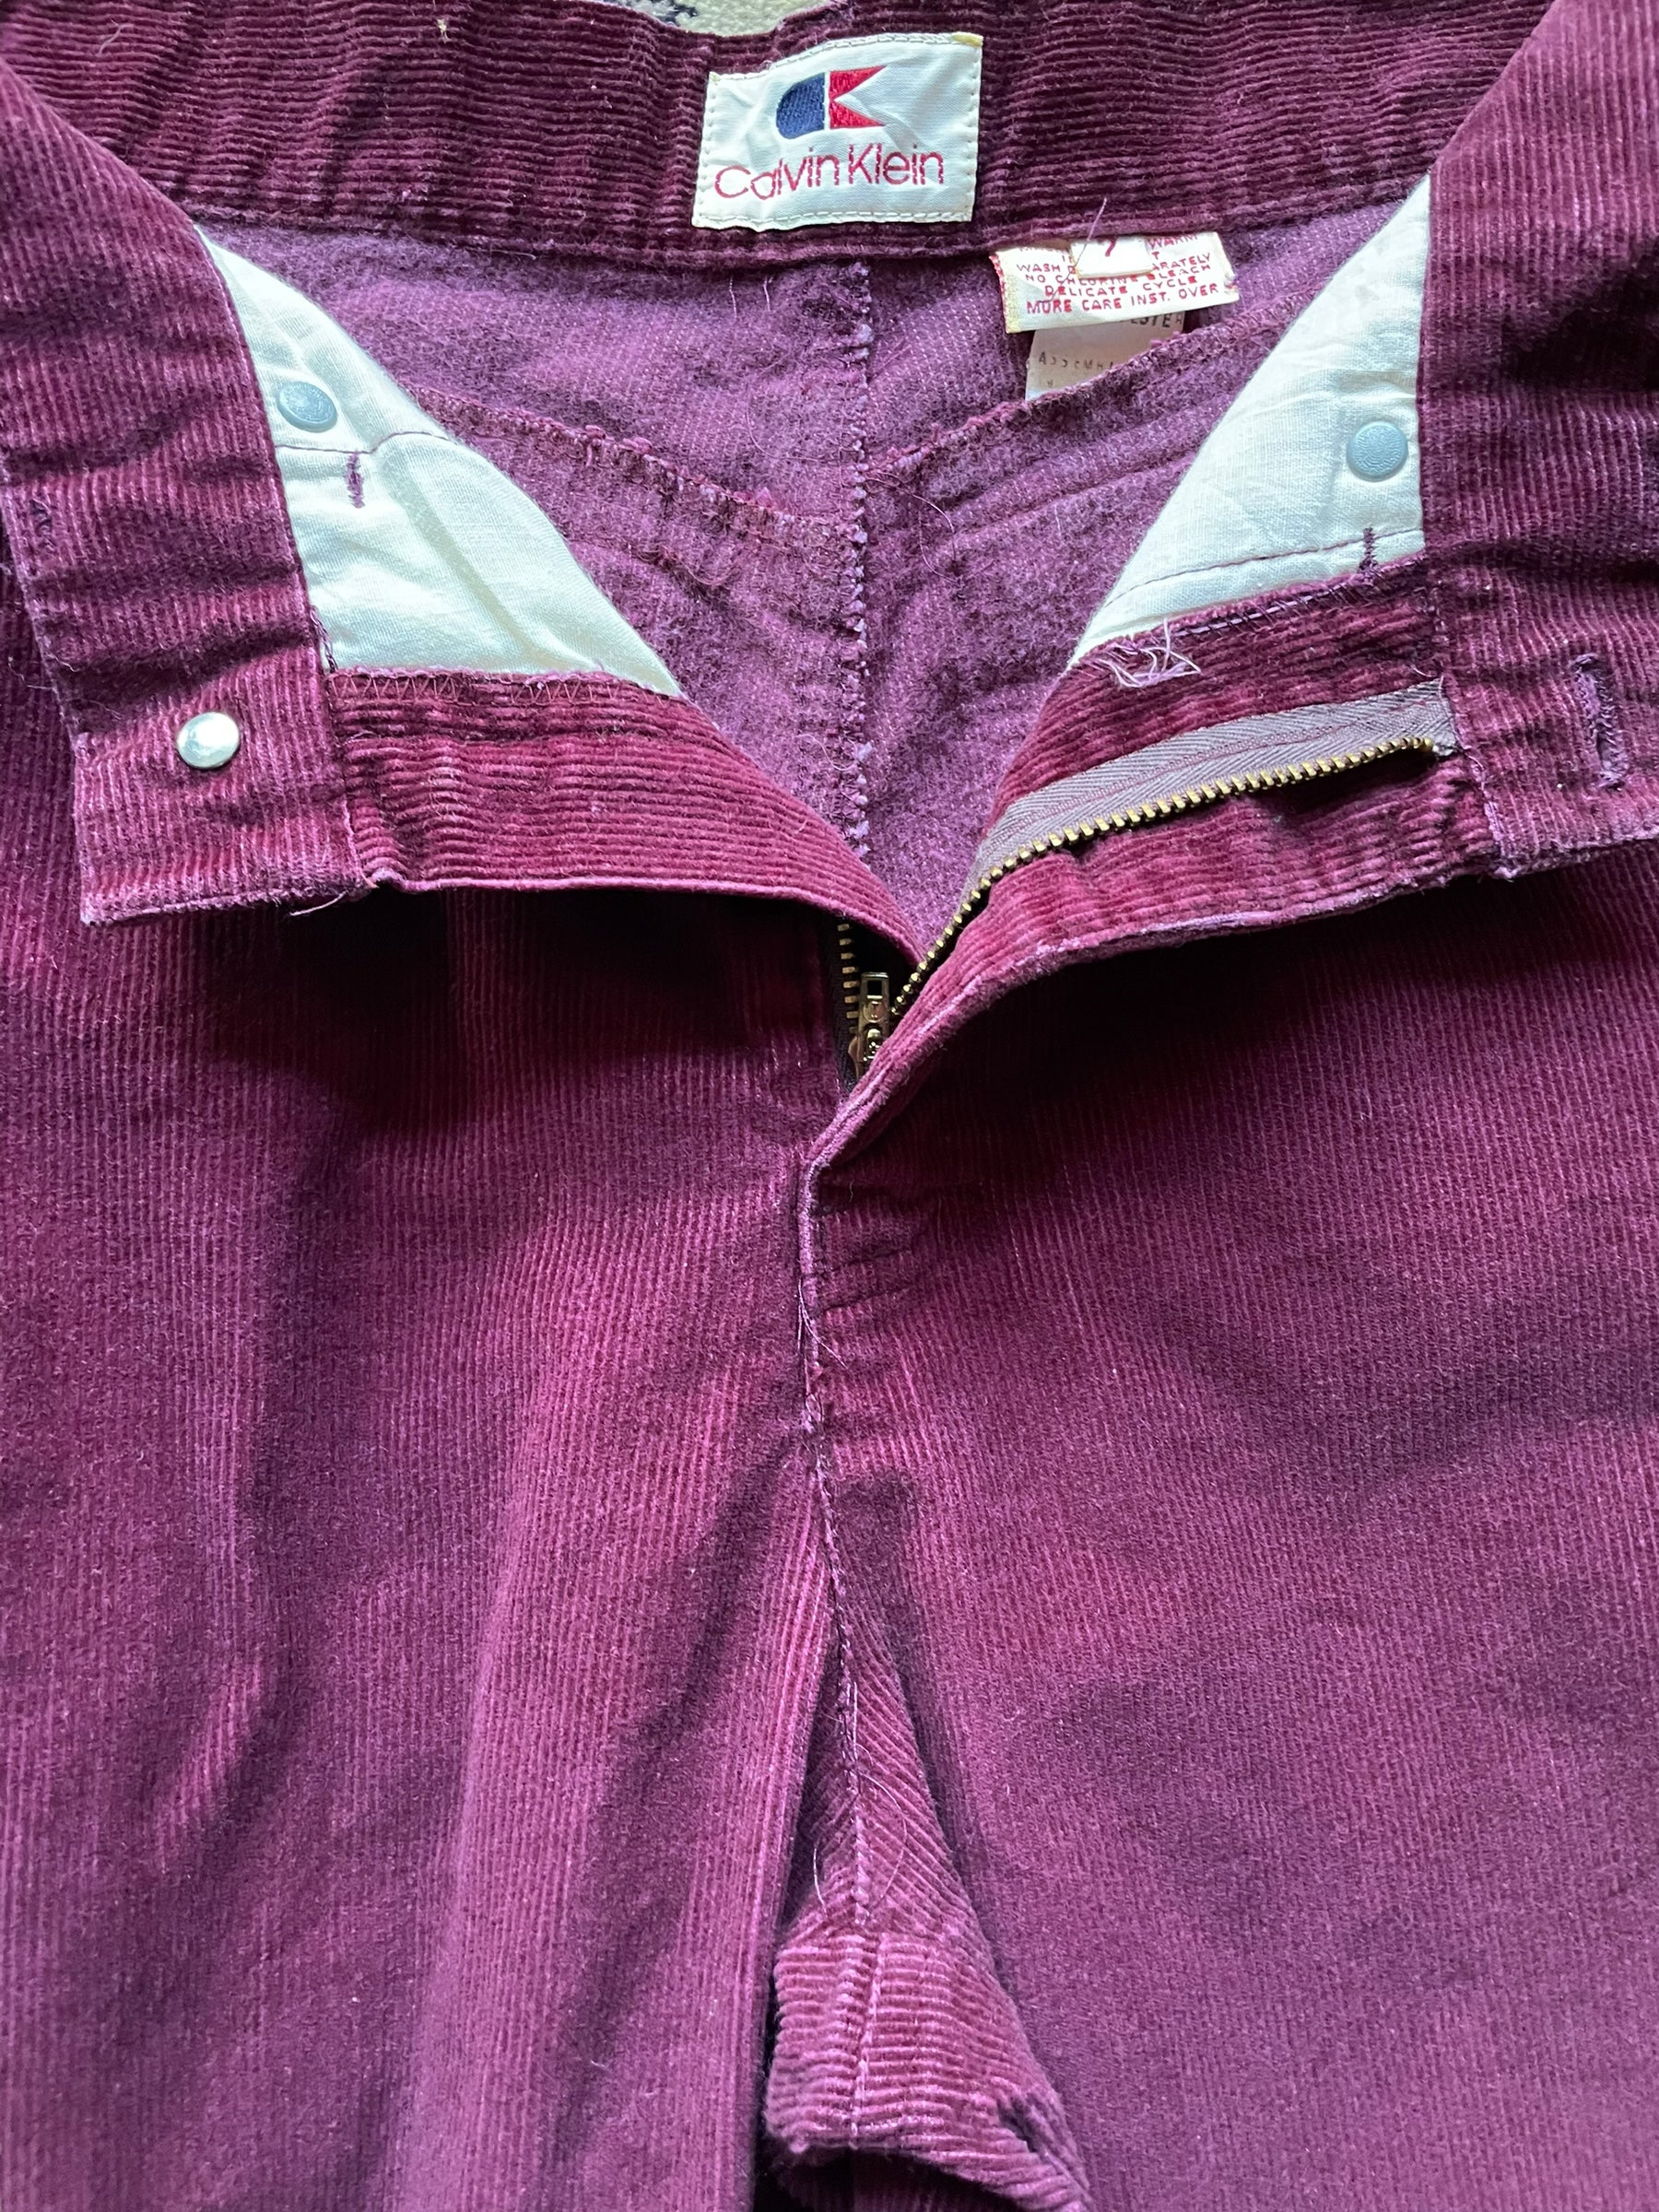 Open zipper view ofVintage 1970s Calvin Klein Corduroy Pants W26 | Barn Owl Vintage Seattle | Vintage Corduroy Pants